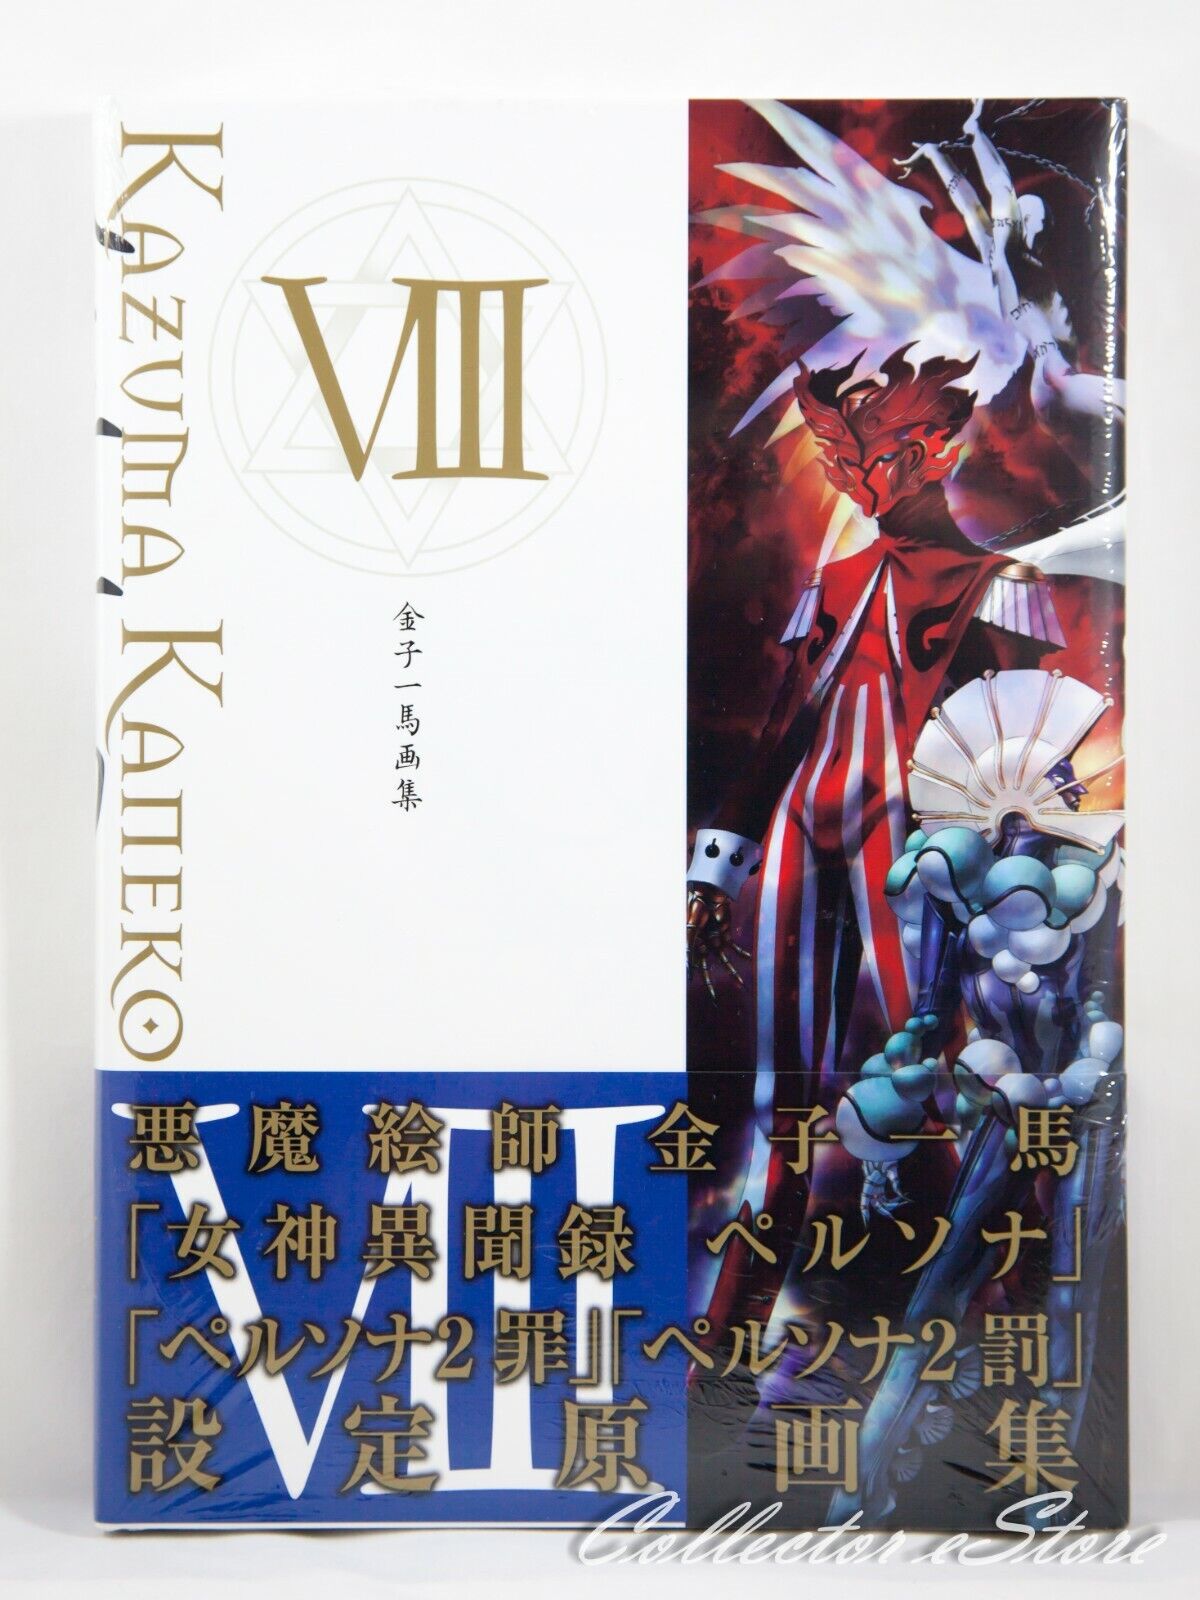 Kazuma Kaneko Works VIII Hardcover Art Book (AIR/DHL)